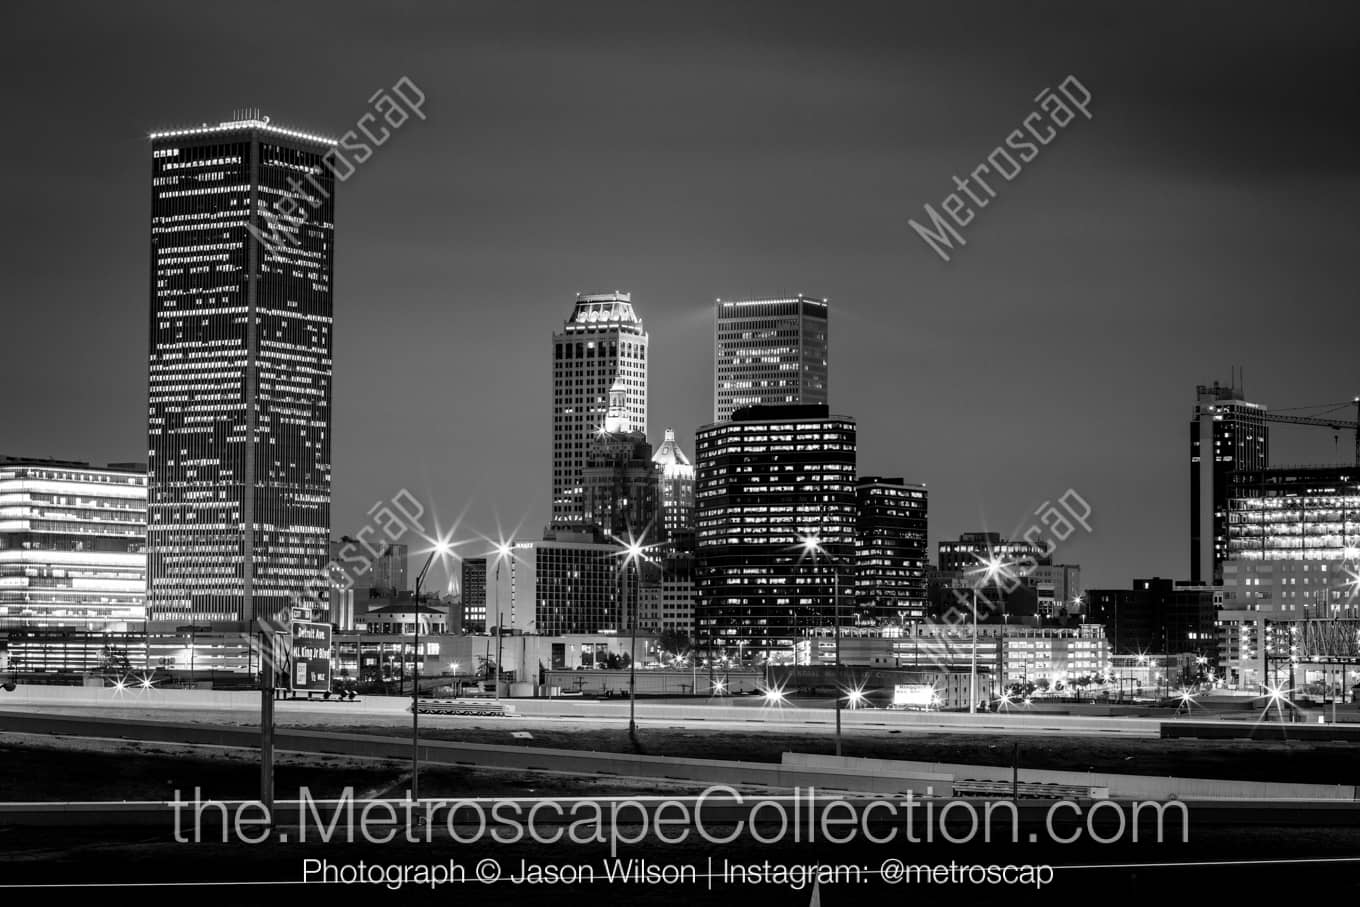 Tulsa Oklahoma Picture at Night